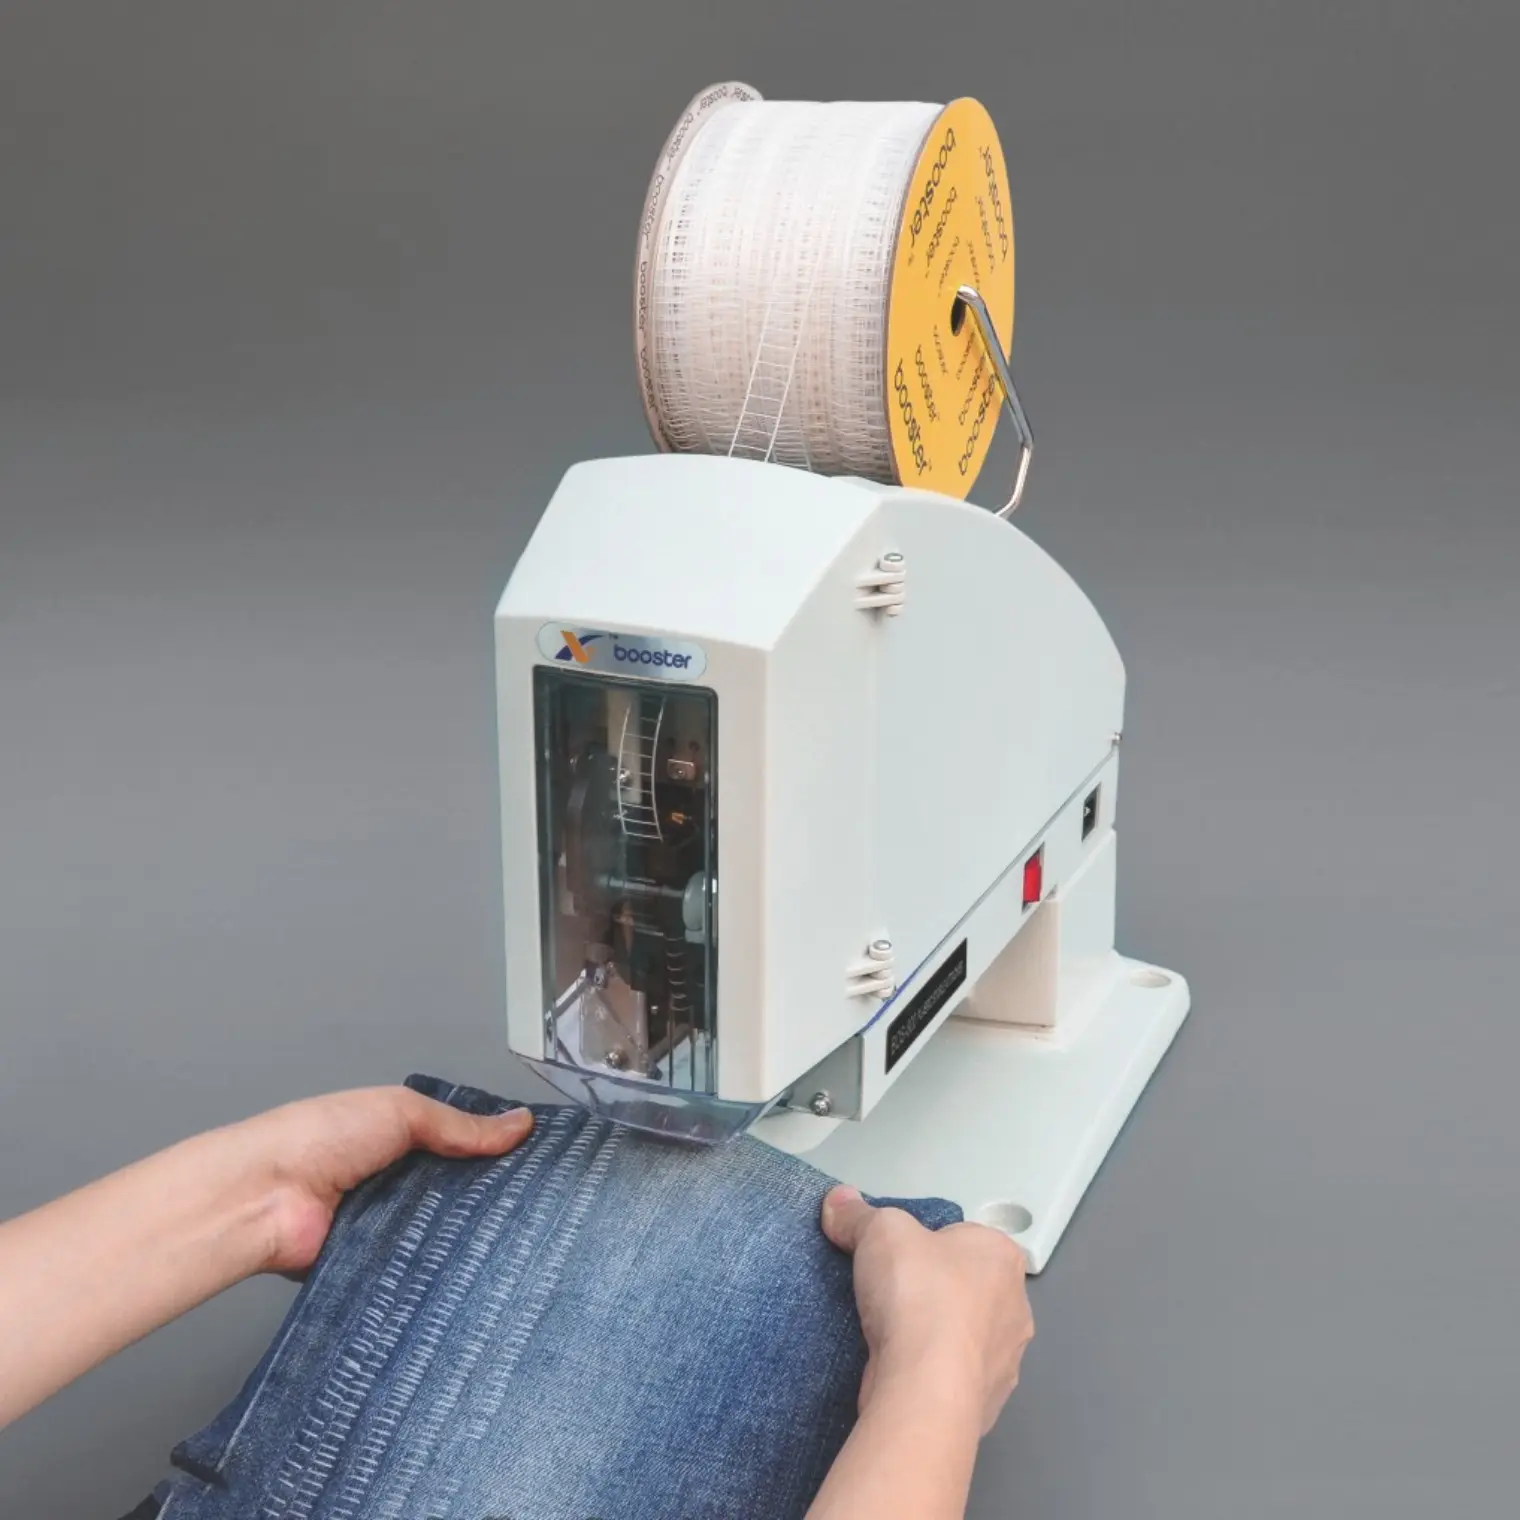 ODM impulsionador plástico grampo máquina automática plástico grampo marcação máquina para roupas toalhas meias jeans pendurar rótulos